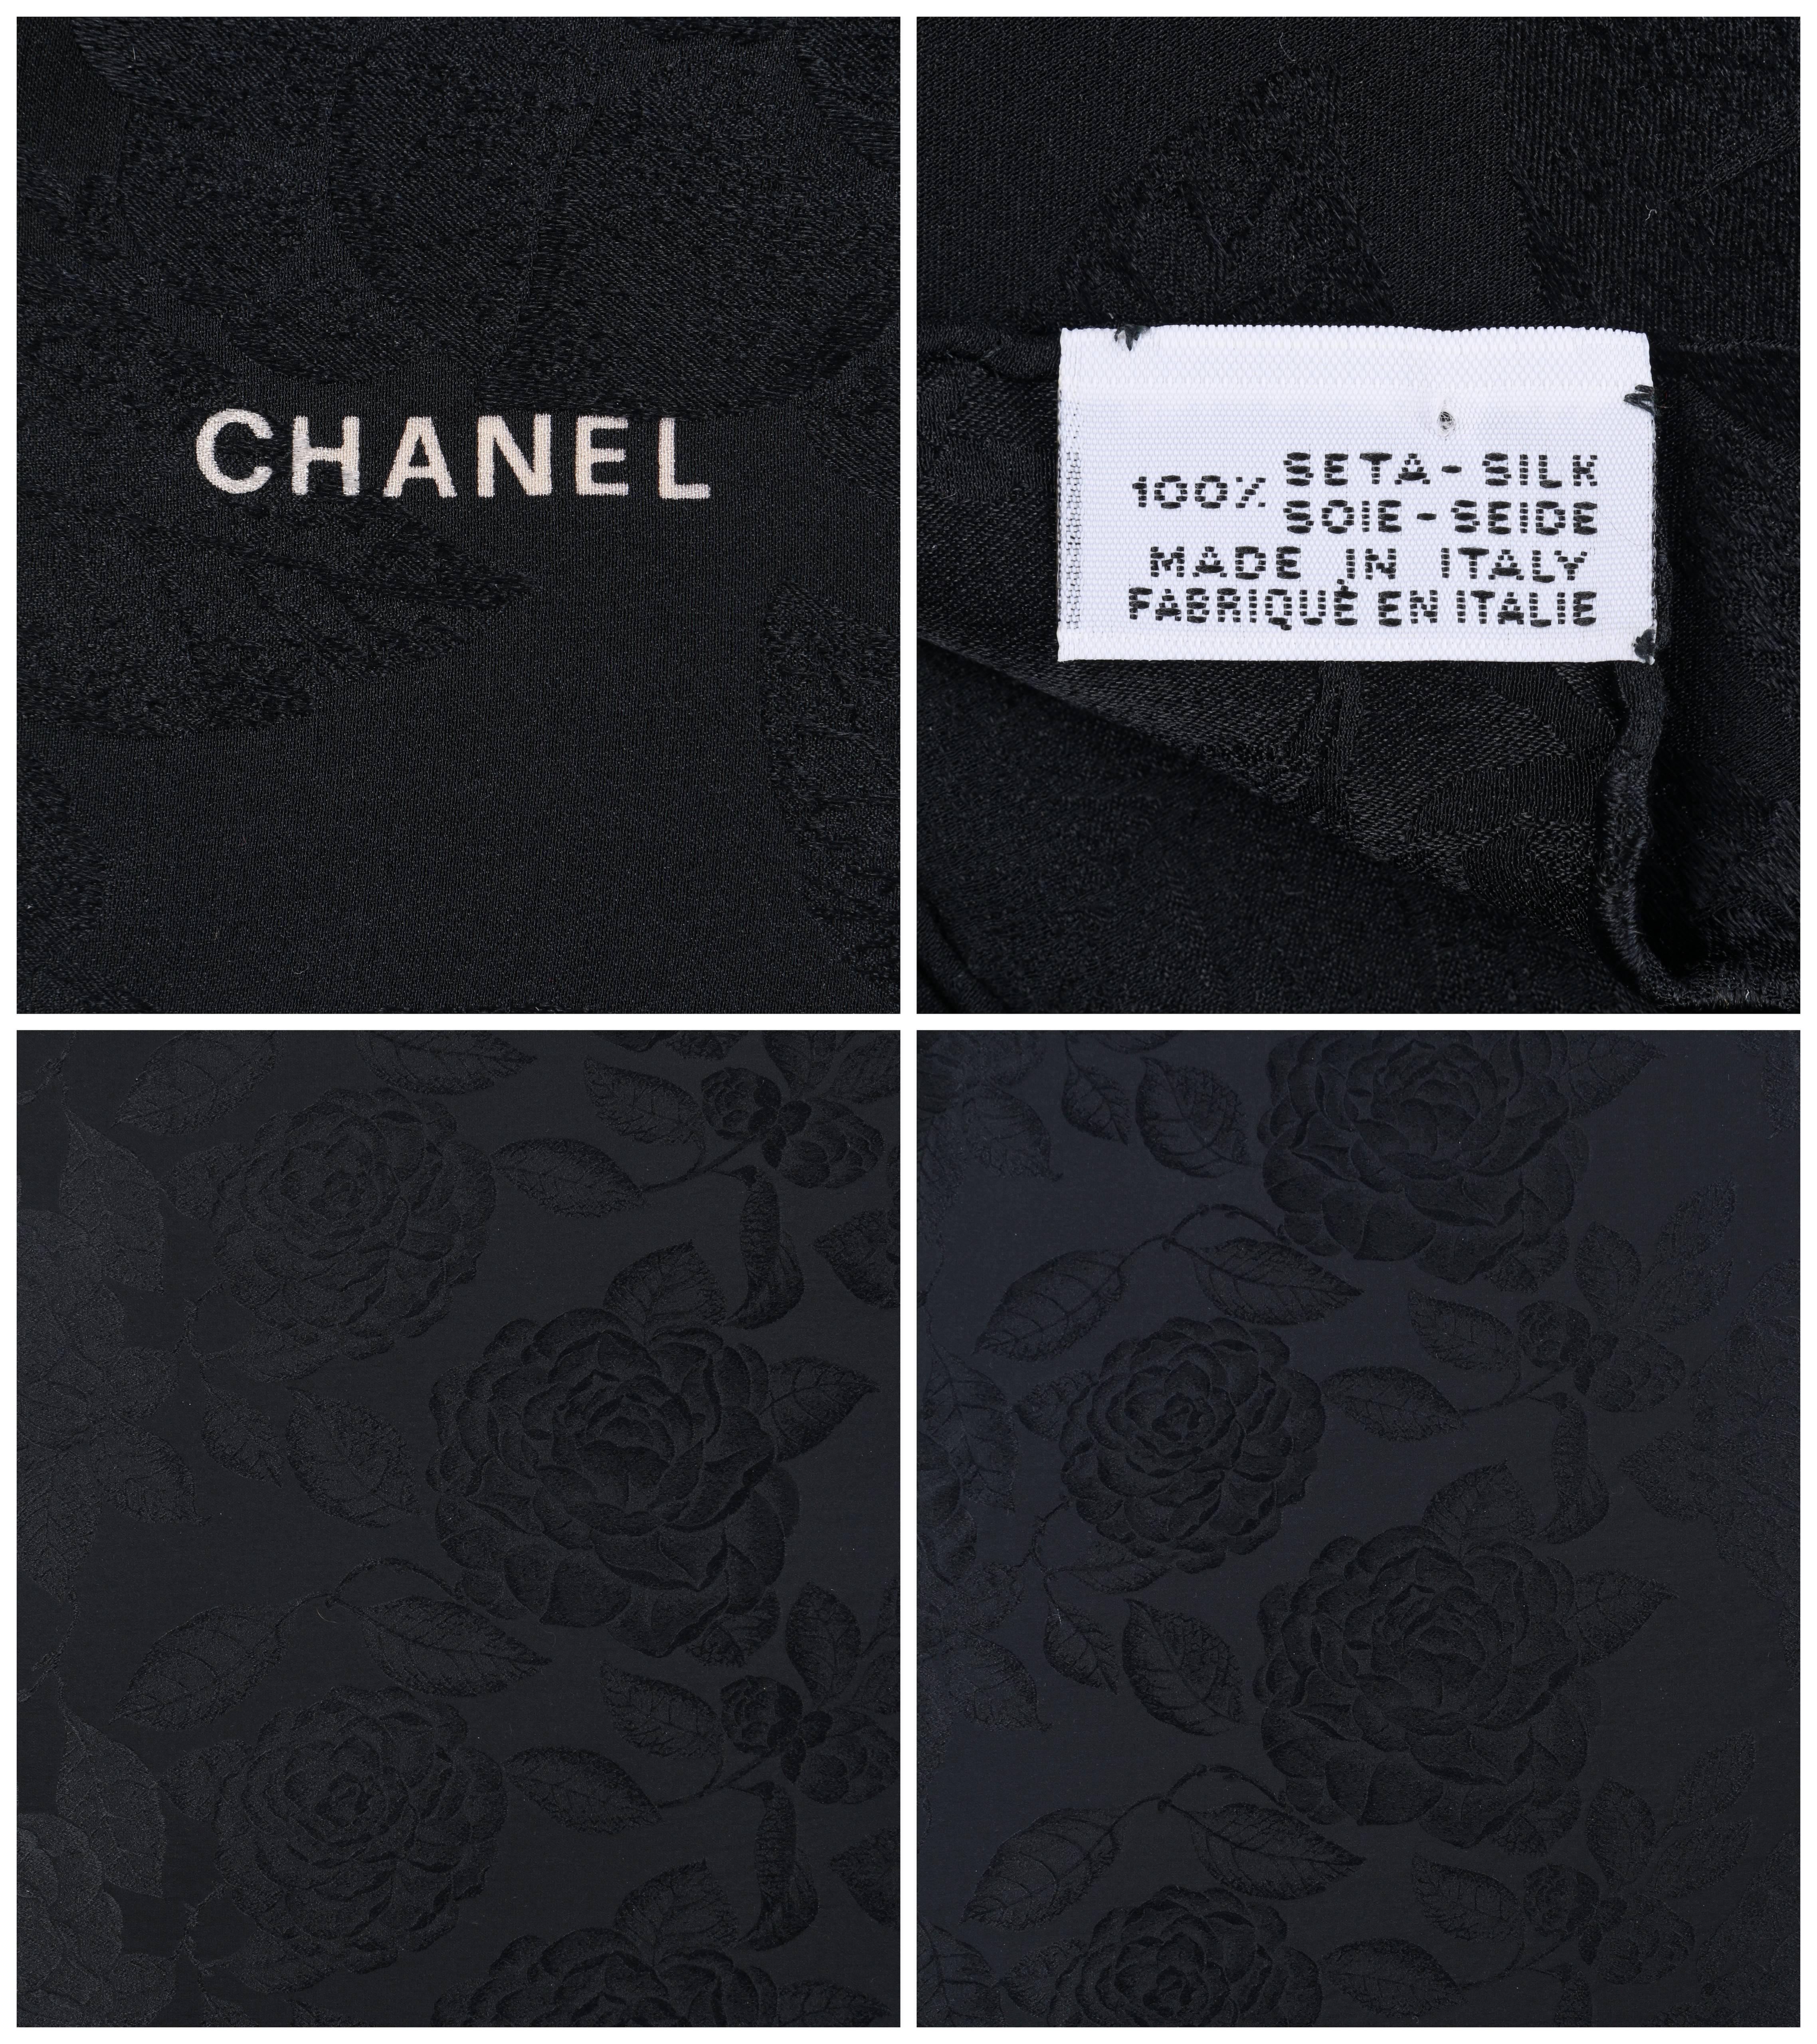 CHANEL Black Satin Camellia Print 100% Silk Large Scarf Wrap Shawl With Box  2